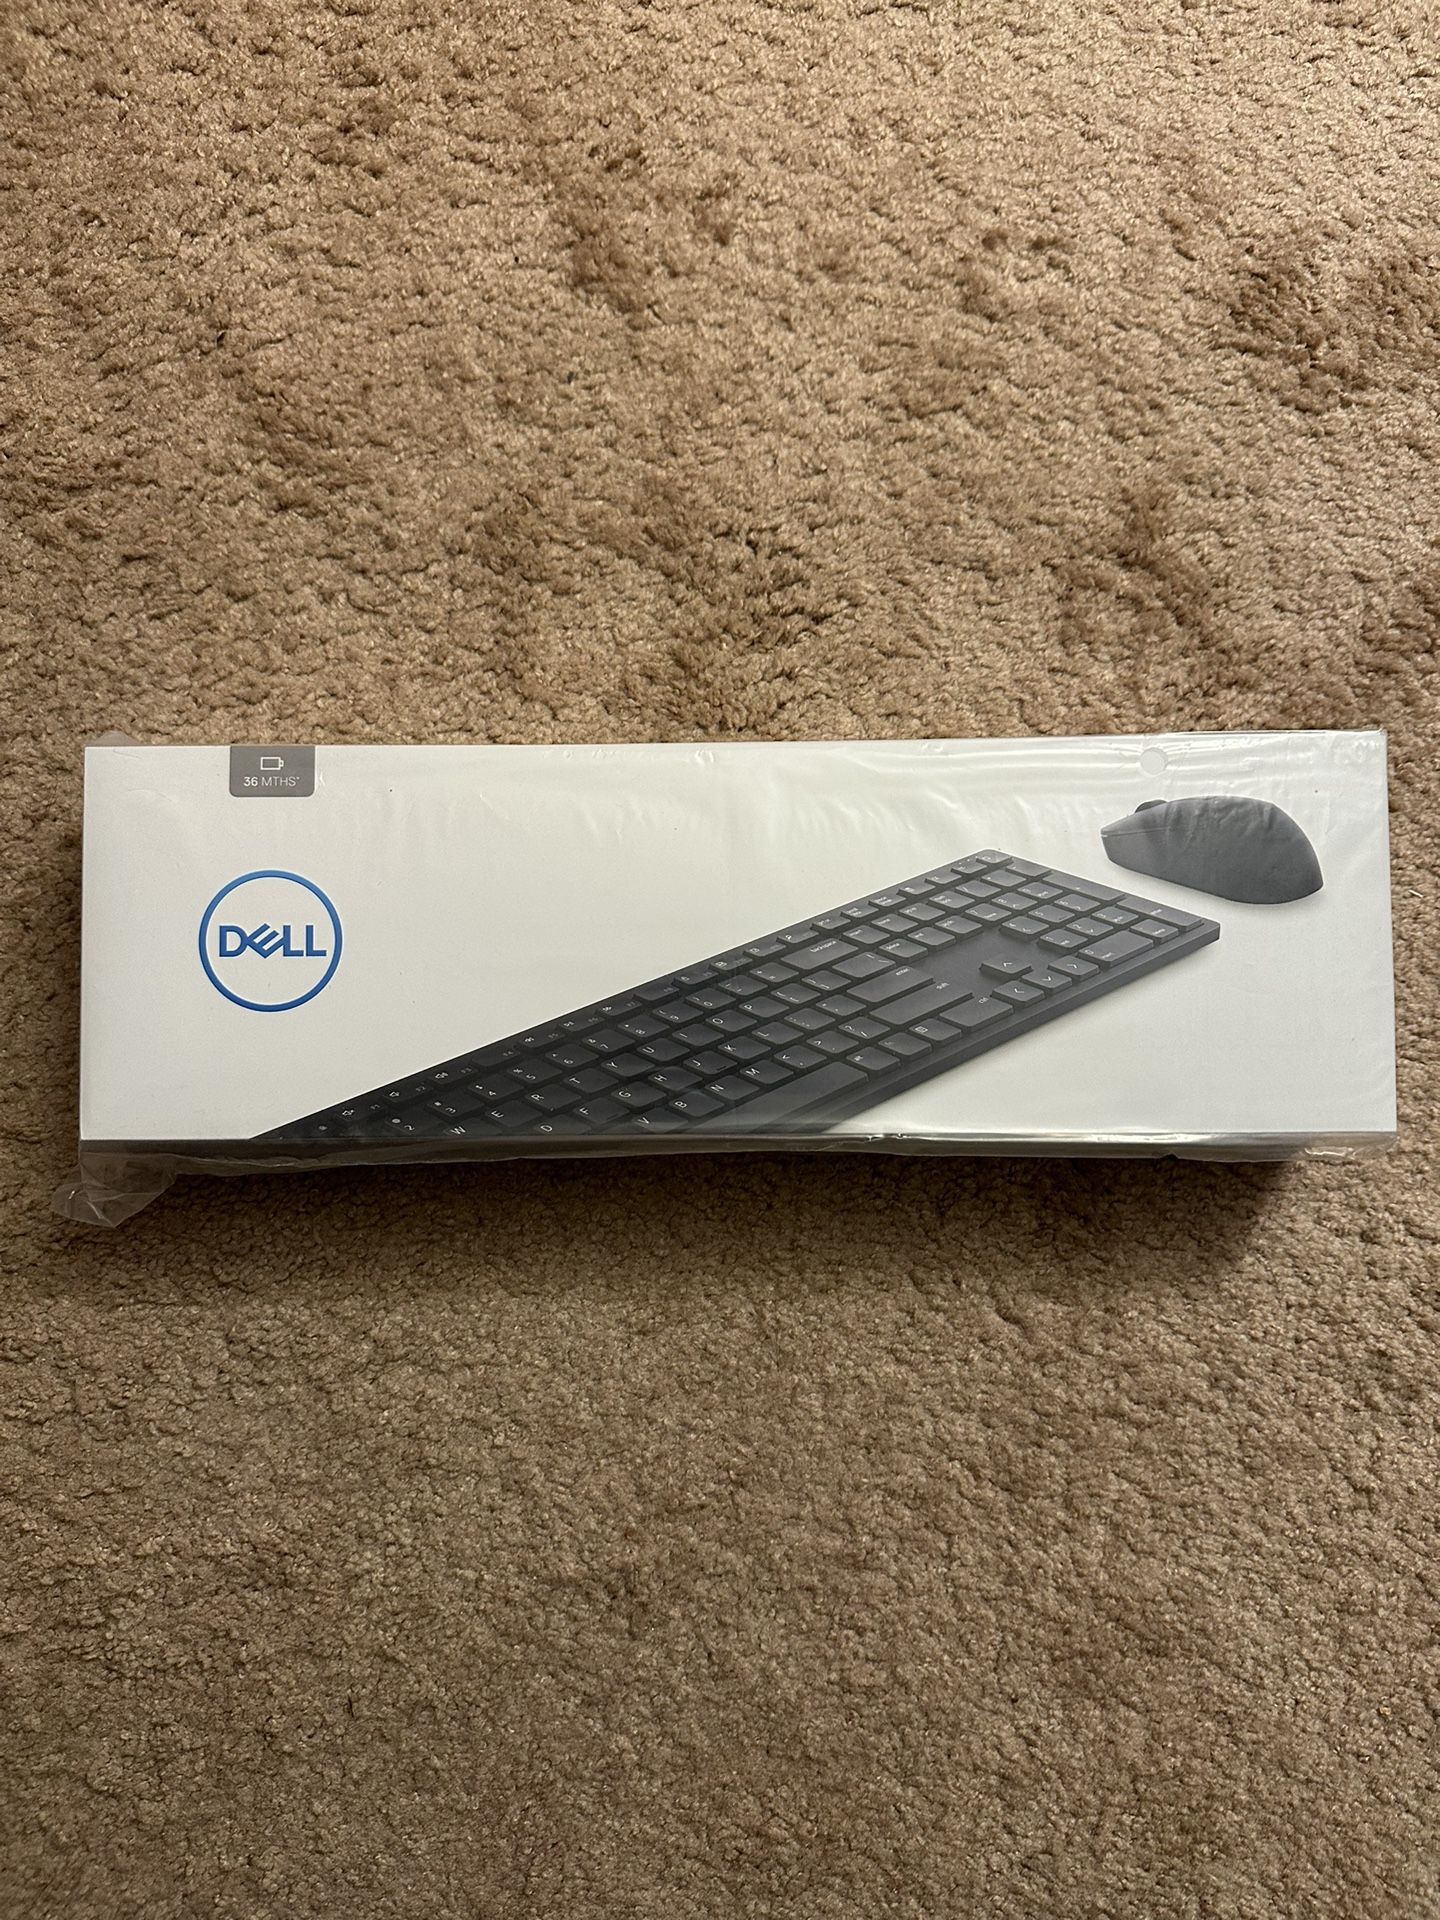 Dell Wireless Keyboard Mouse Combo KM5221W